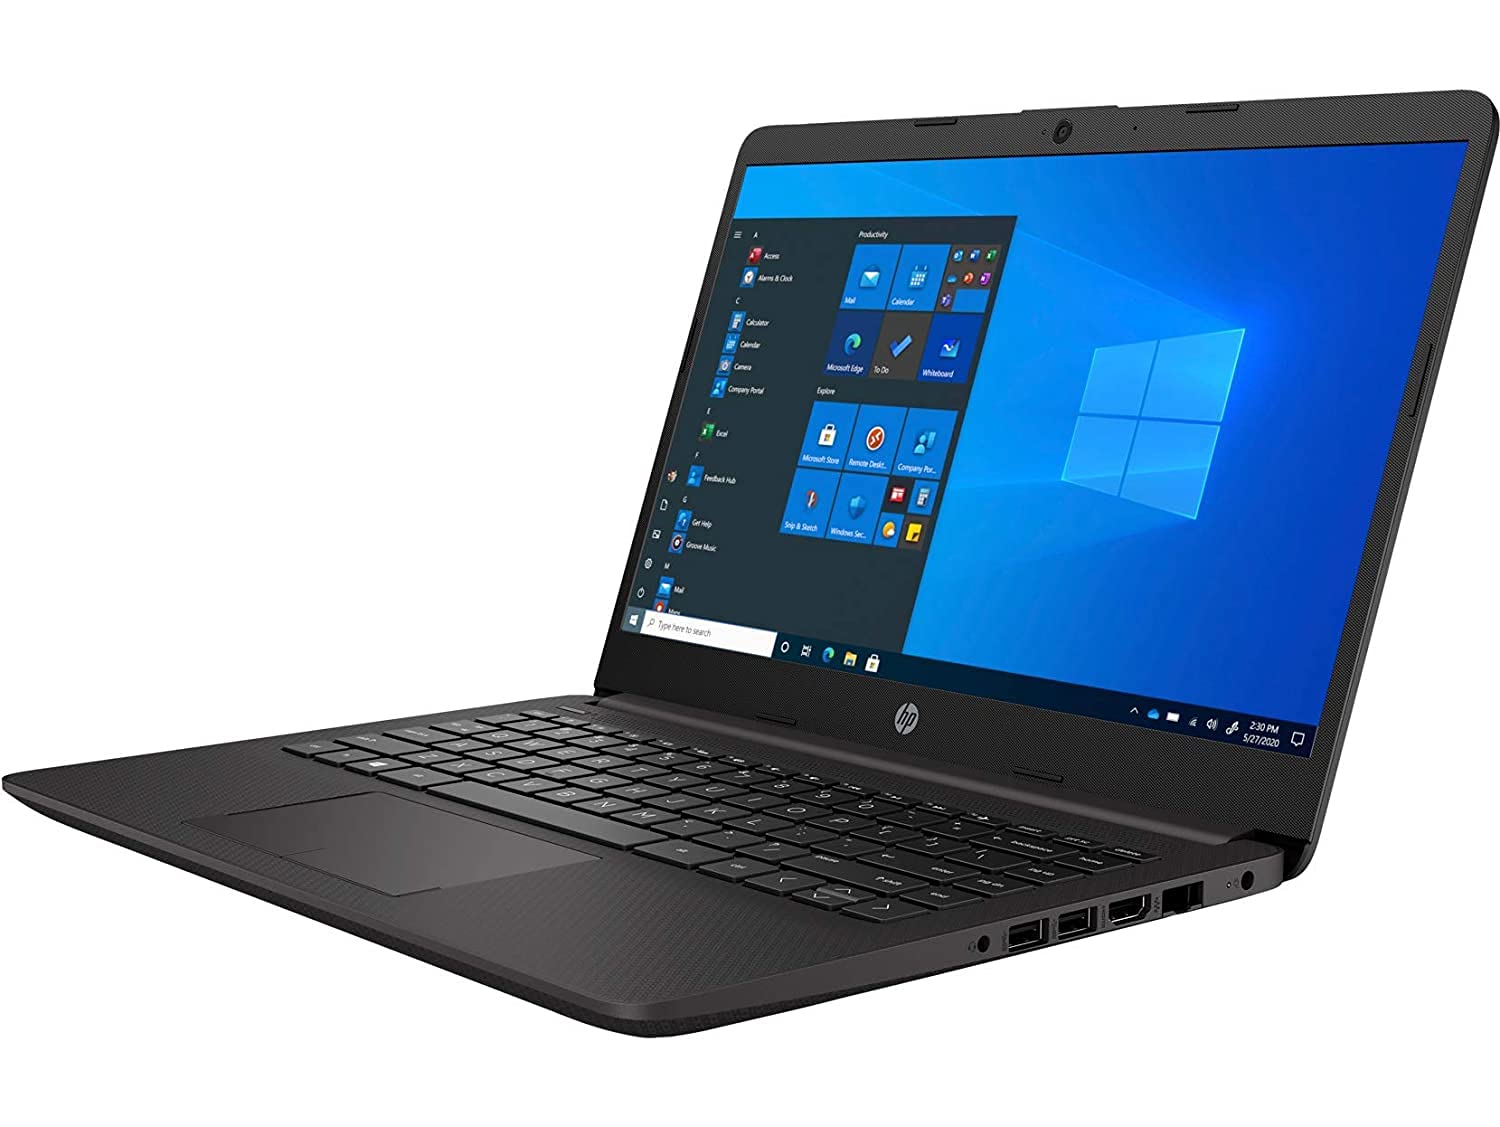 Laptop HP 240 G8 Core™ i3 1115G4, 11va Gen, Ram 8Gb, Disco SSD 256Gb, 15.6" HD, Usb-C, WiFi, RJ45, HDMI,  cámara web HD, Bluetooth, Windows 10, Color Black